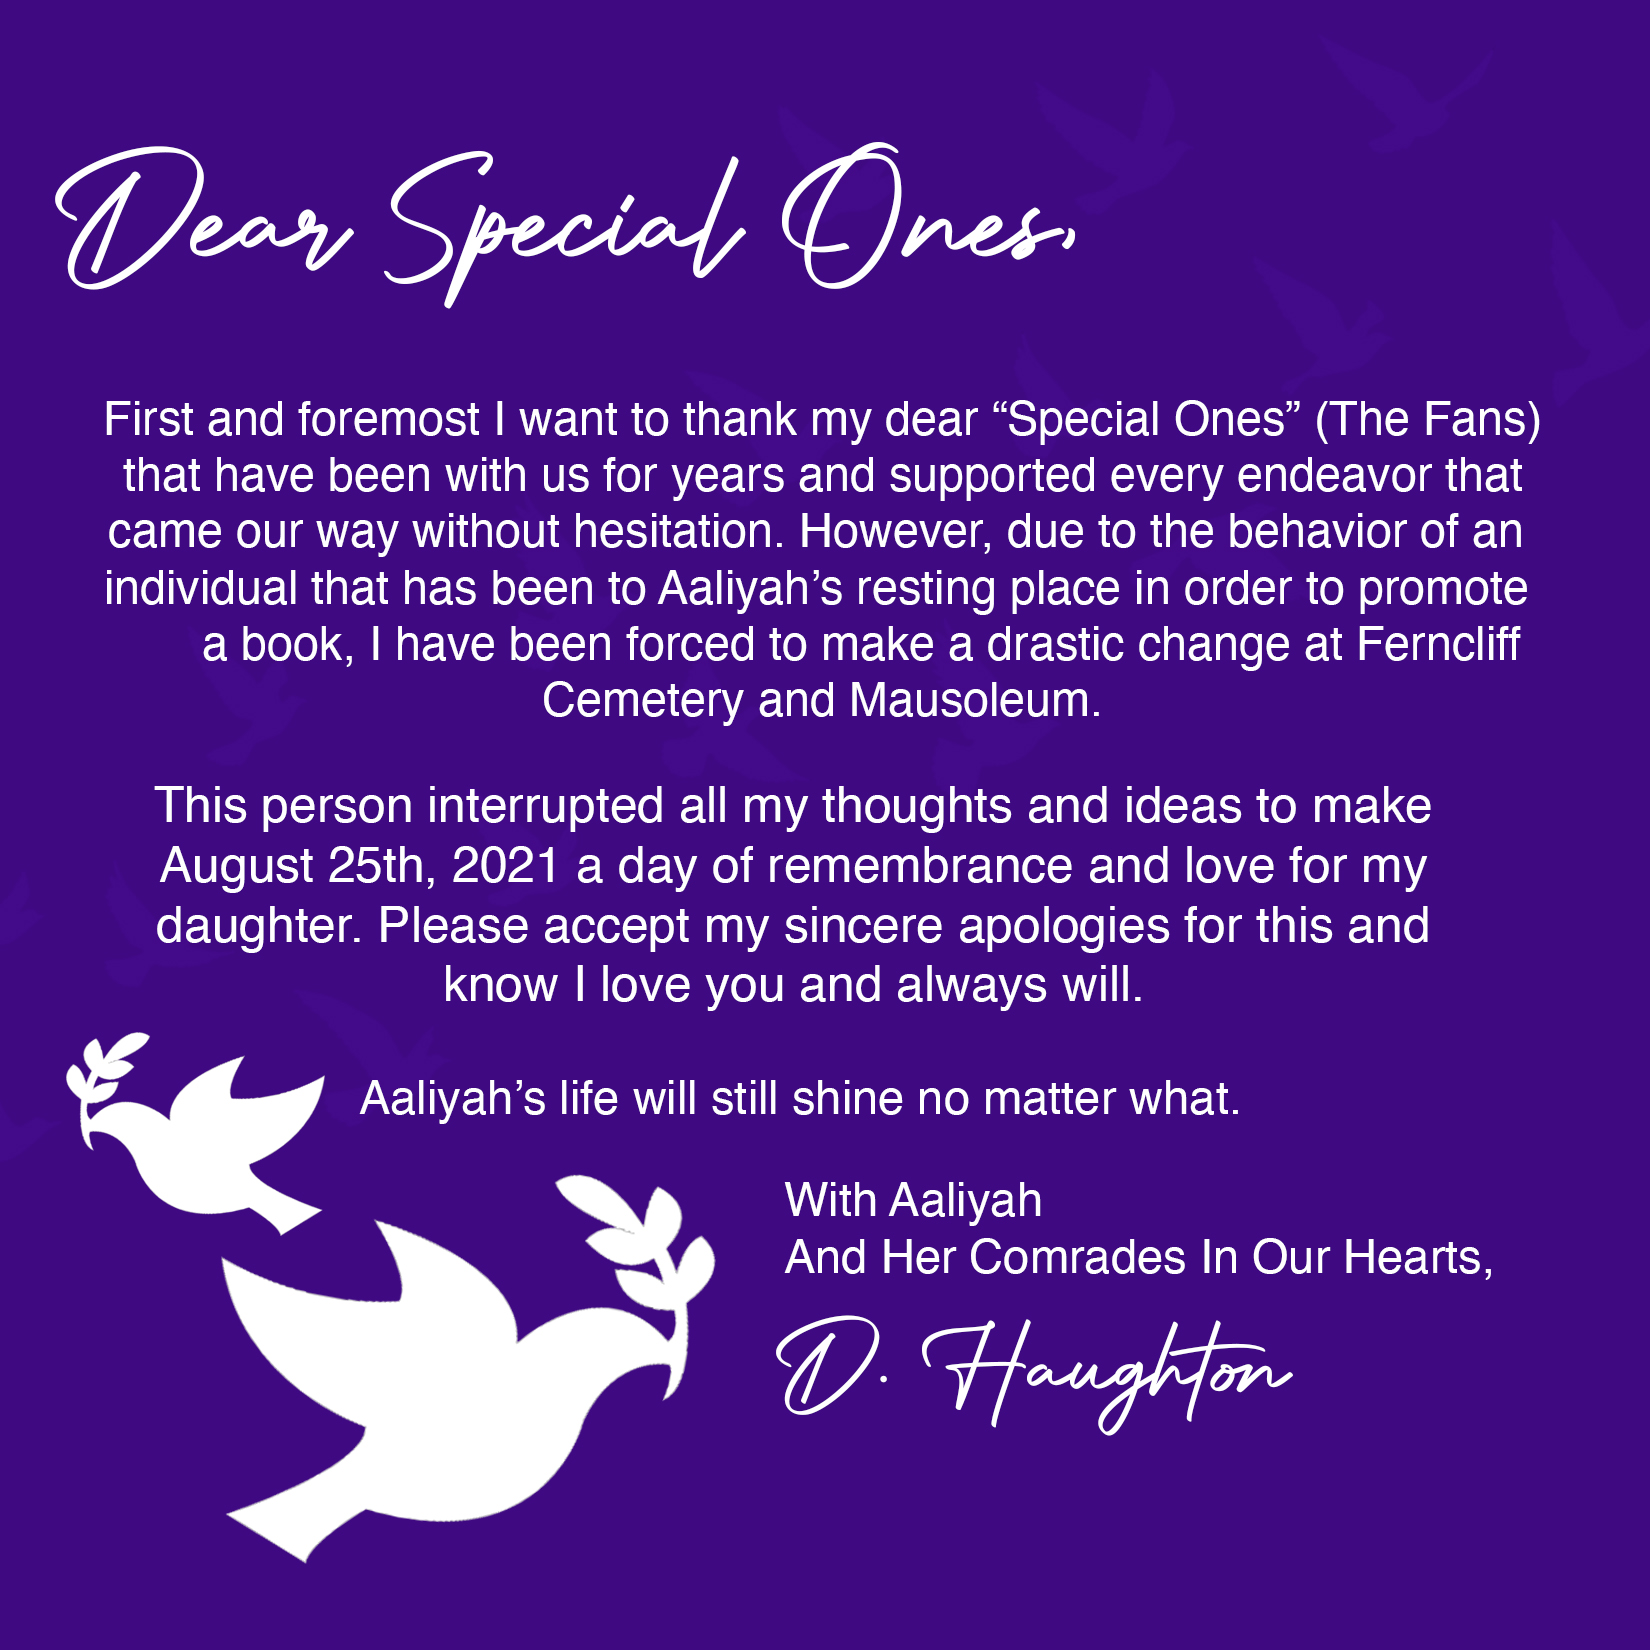 Dear Special Ones